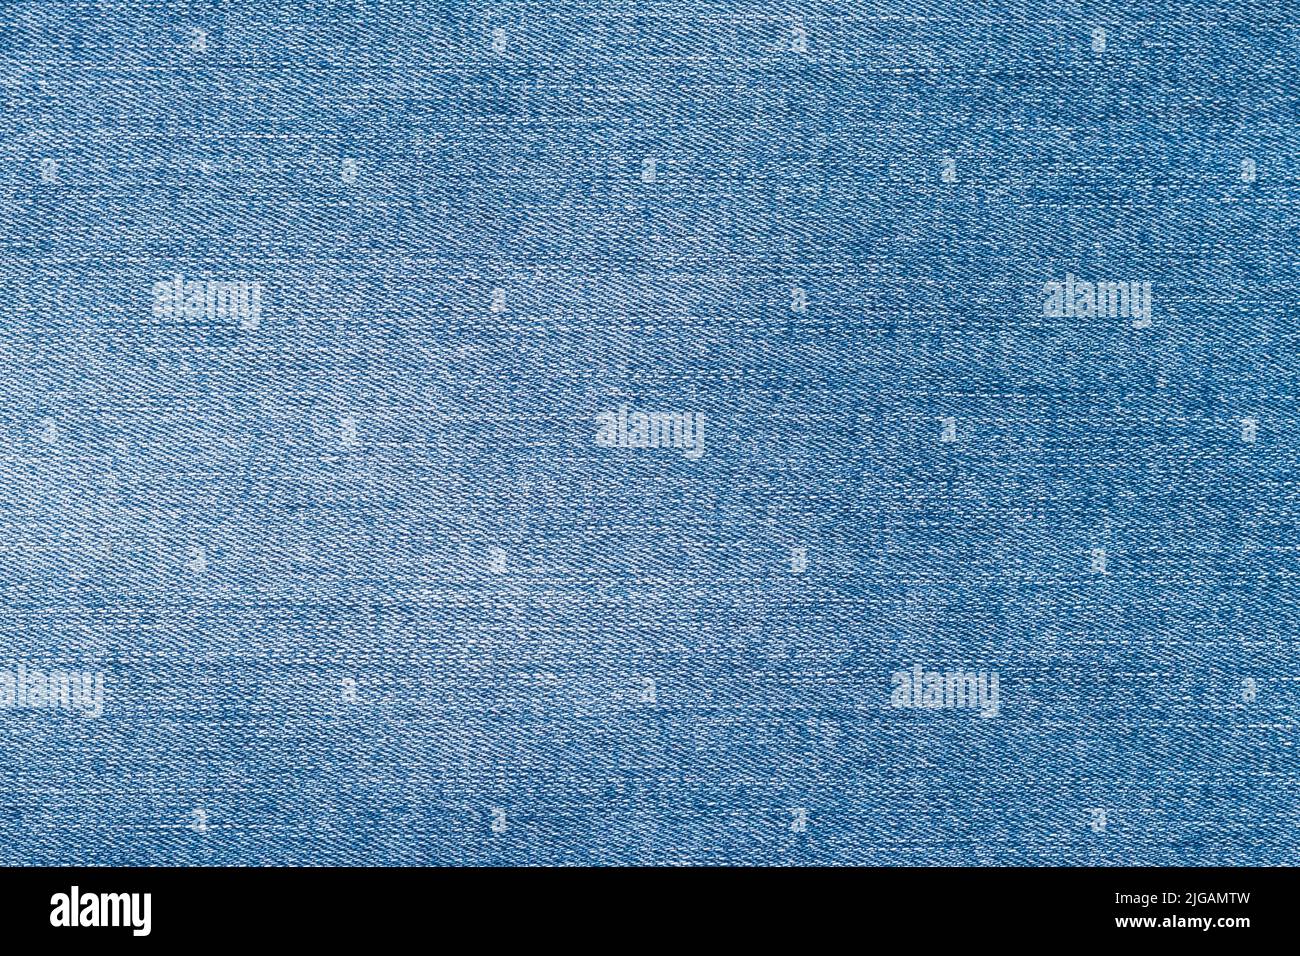 Textura de fondo vaquero, primeros planos jeans, detalles línea patrón, superficie de tela, papel tapiz de tela azul, material rugoso Foto de stock